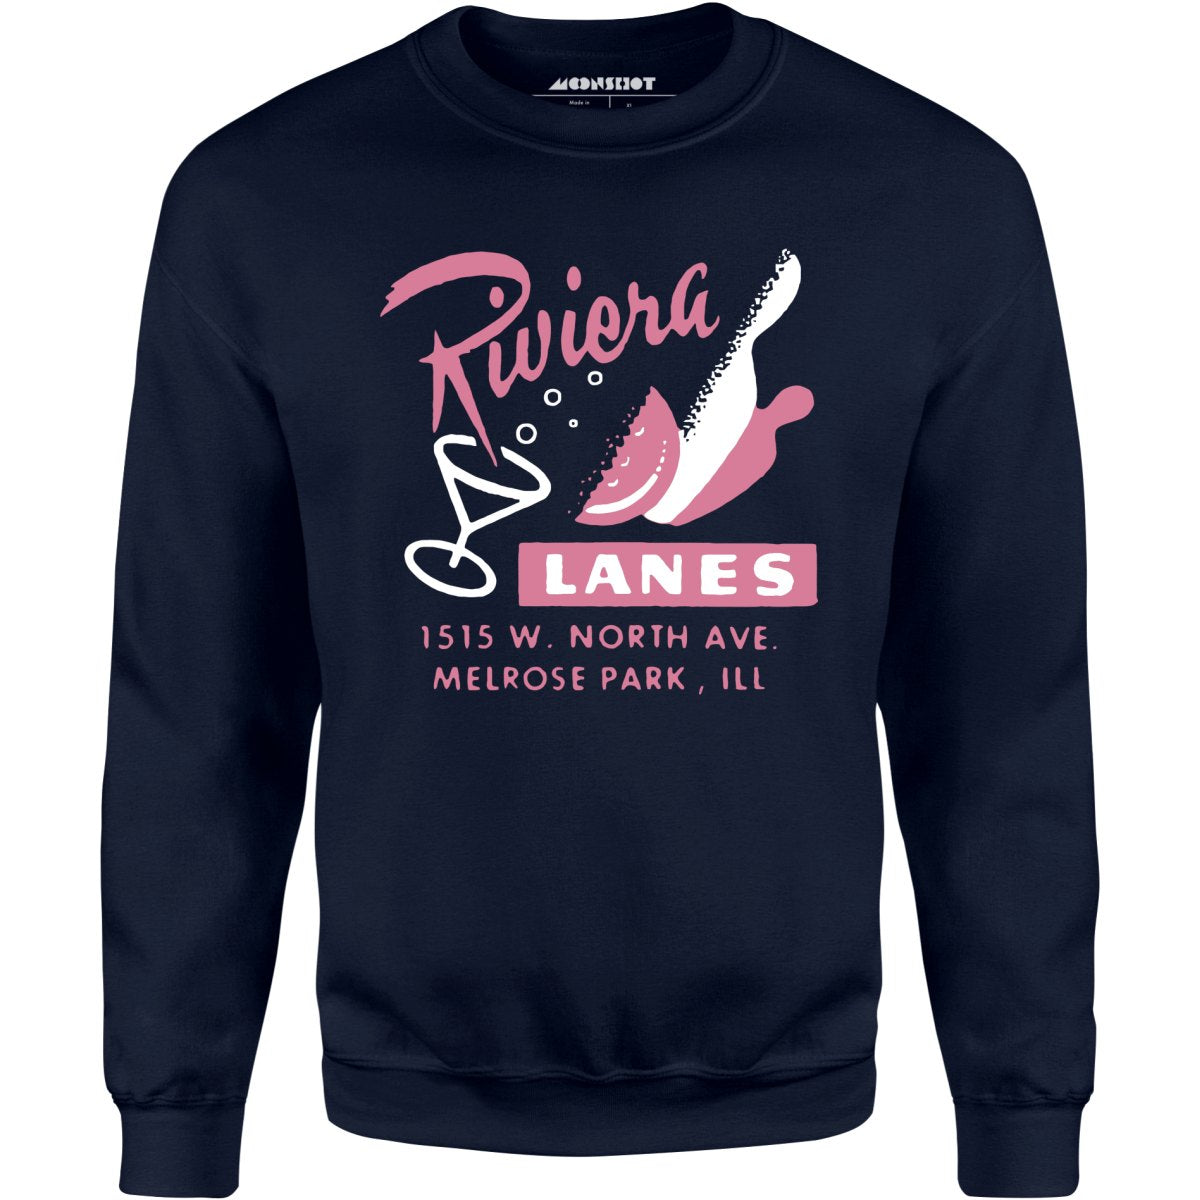 Riviera Lanes - Melrose Park, IL - Vintage Bowling Alley - Unisex Sweatshirt